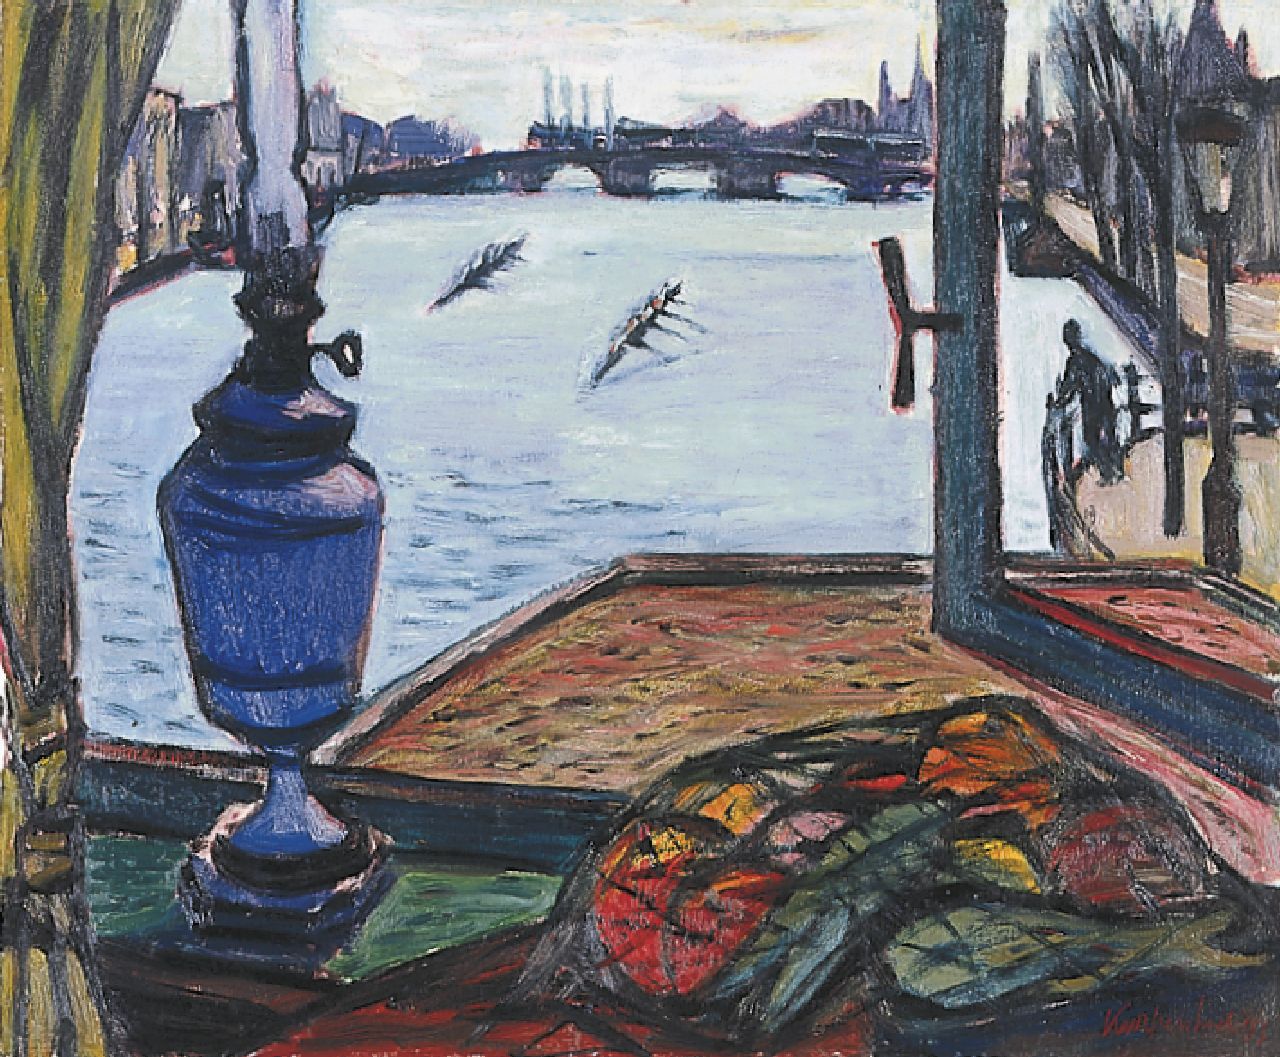 Kurpershoek T.L.  | Theodorus Lambertus 'Theo' Kurpershoek, Boat race on the Amstel, Amsterdam, oil on canvas 50.1 x 60.0 cm, signed l.r. and dated '53